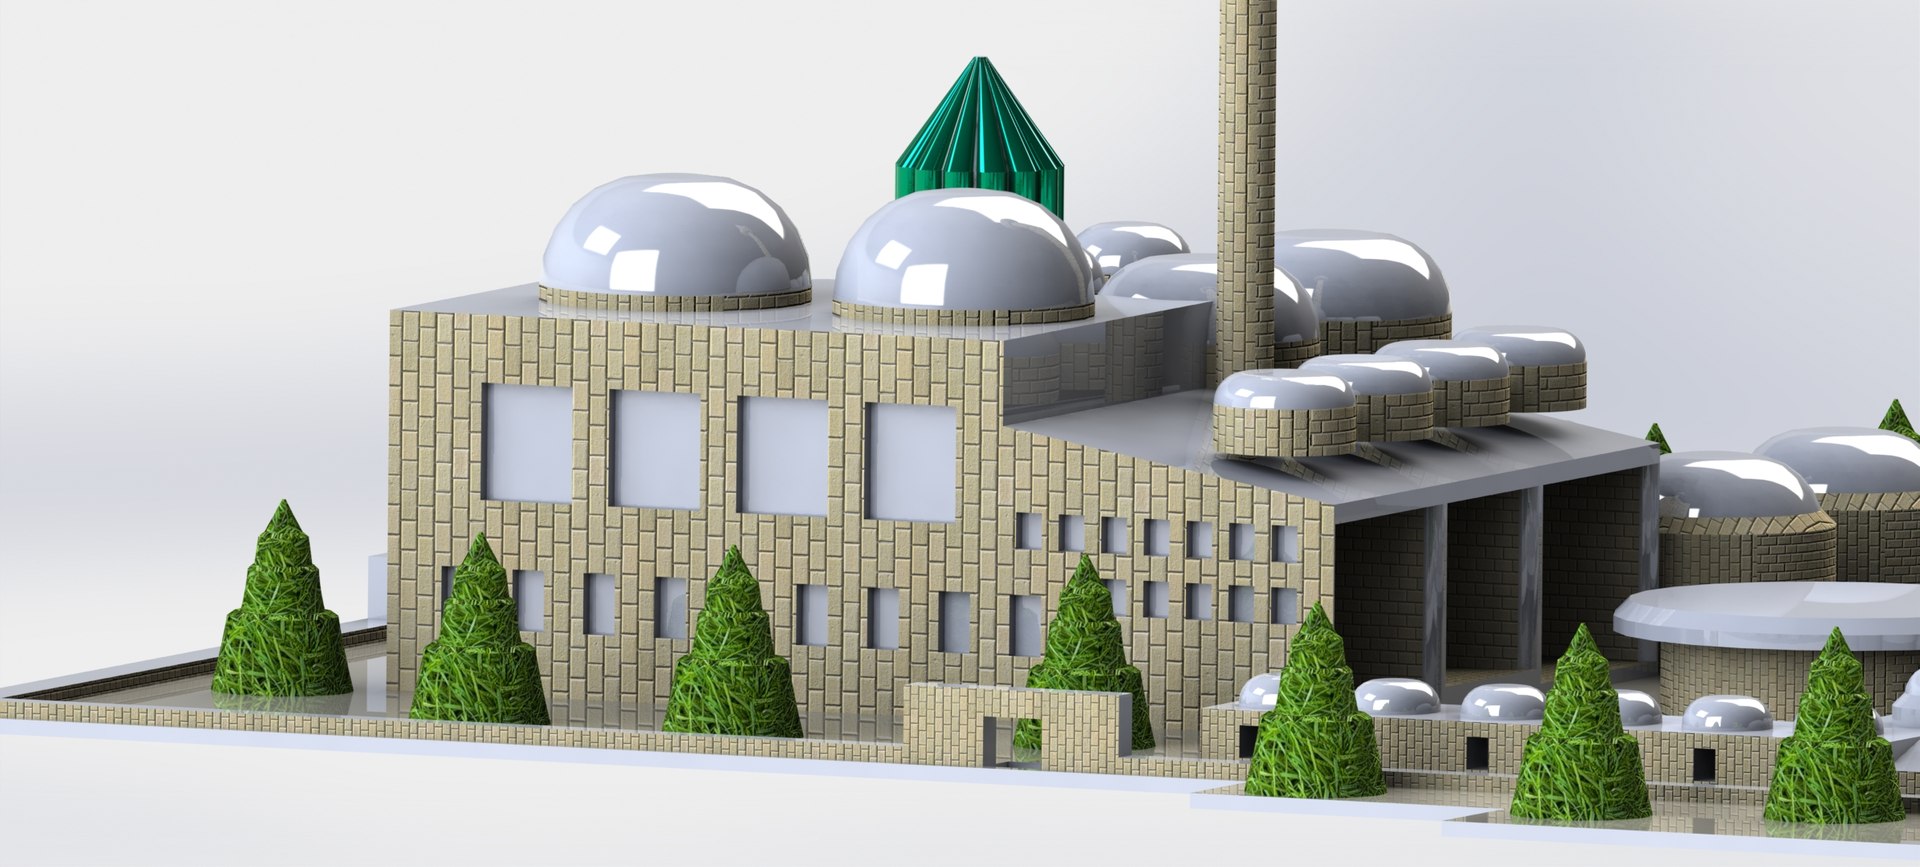 Mevlana Rumi Mosque Museleum Building 3D Model - TurboSquid 1799715